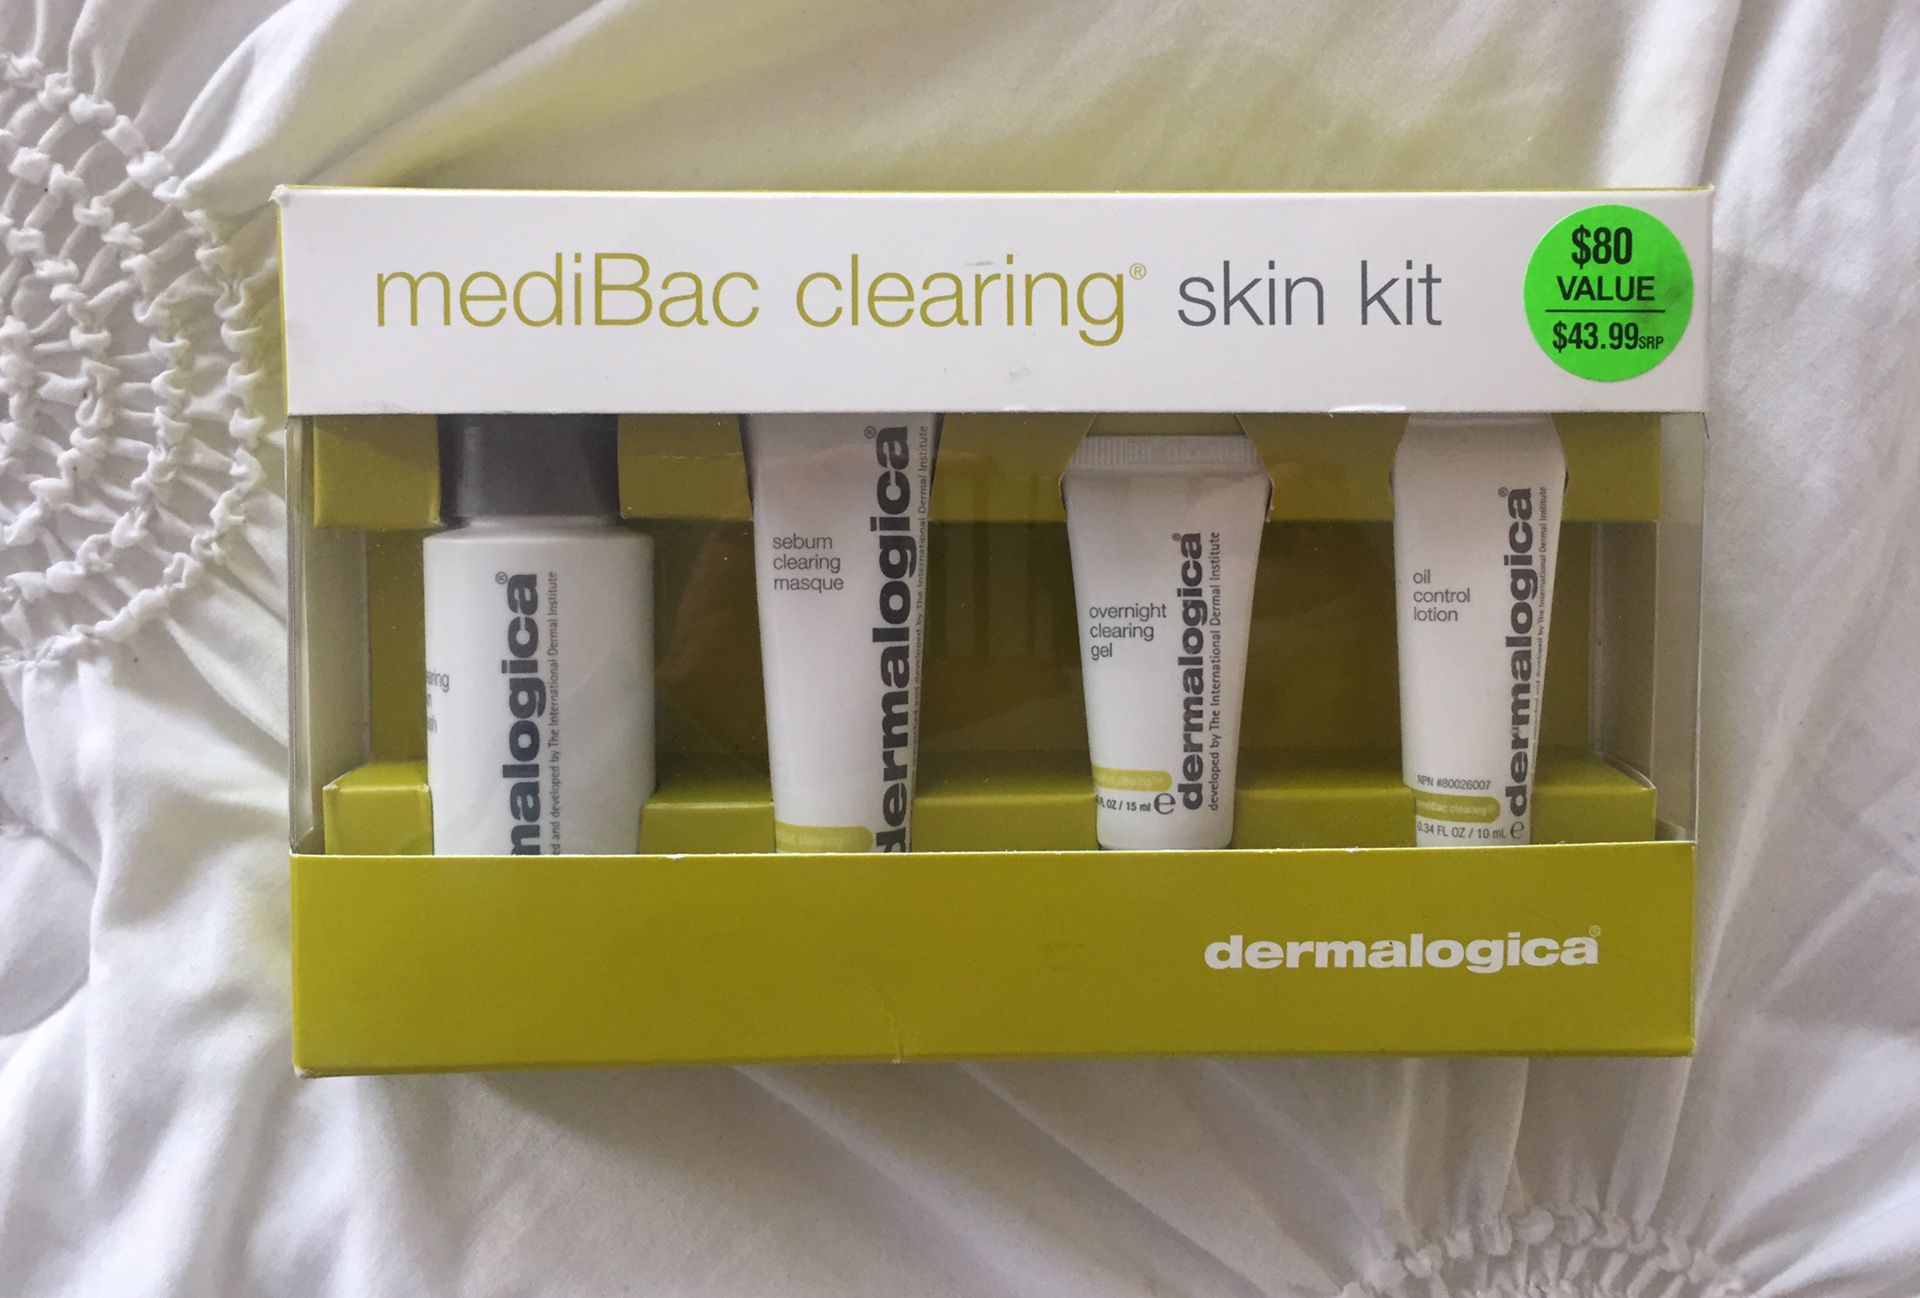 mediBac clearing skin kit by dermalogica